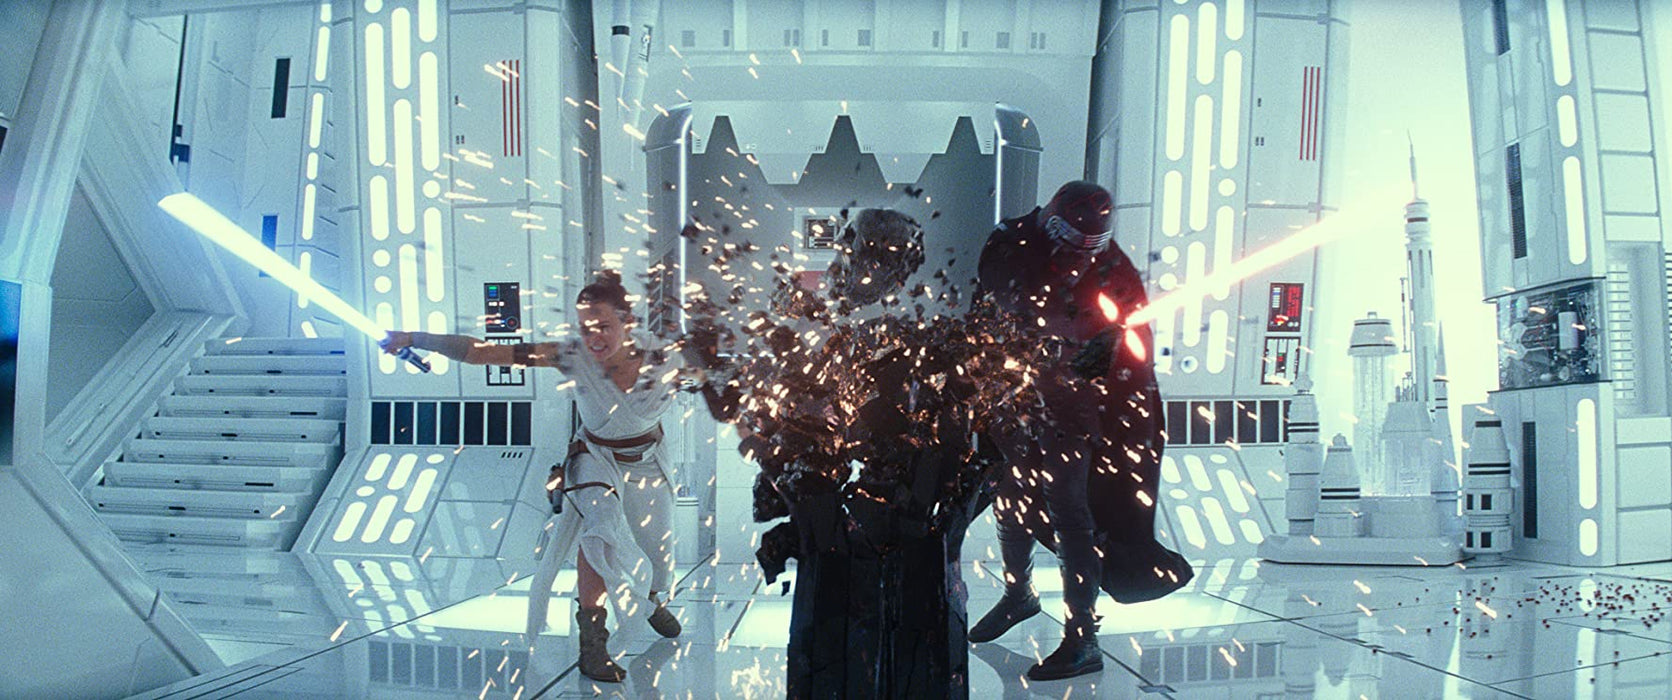 Star Wars: Episode IX - The Rise of Skywalker 4K [Blu-ray + 4K UHD]